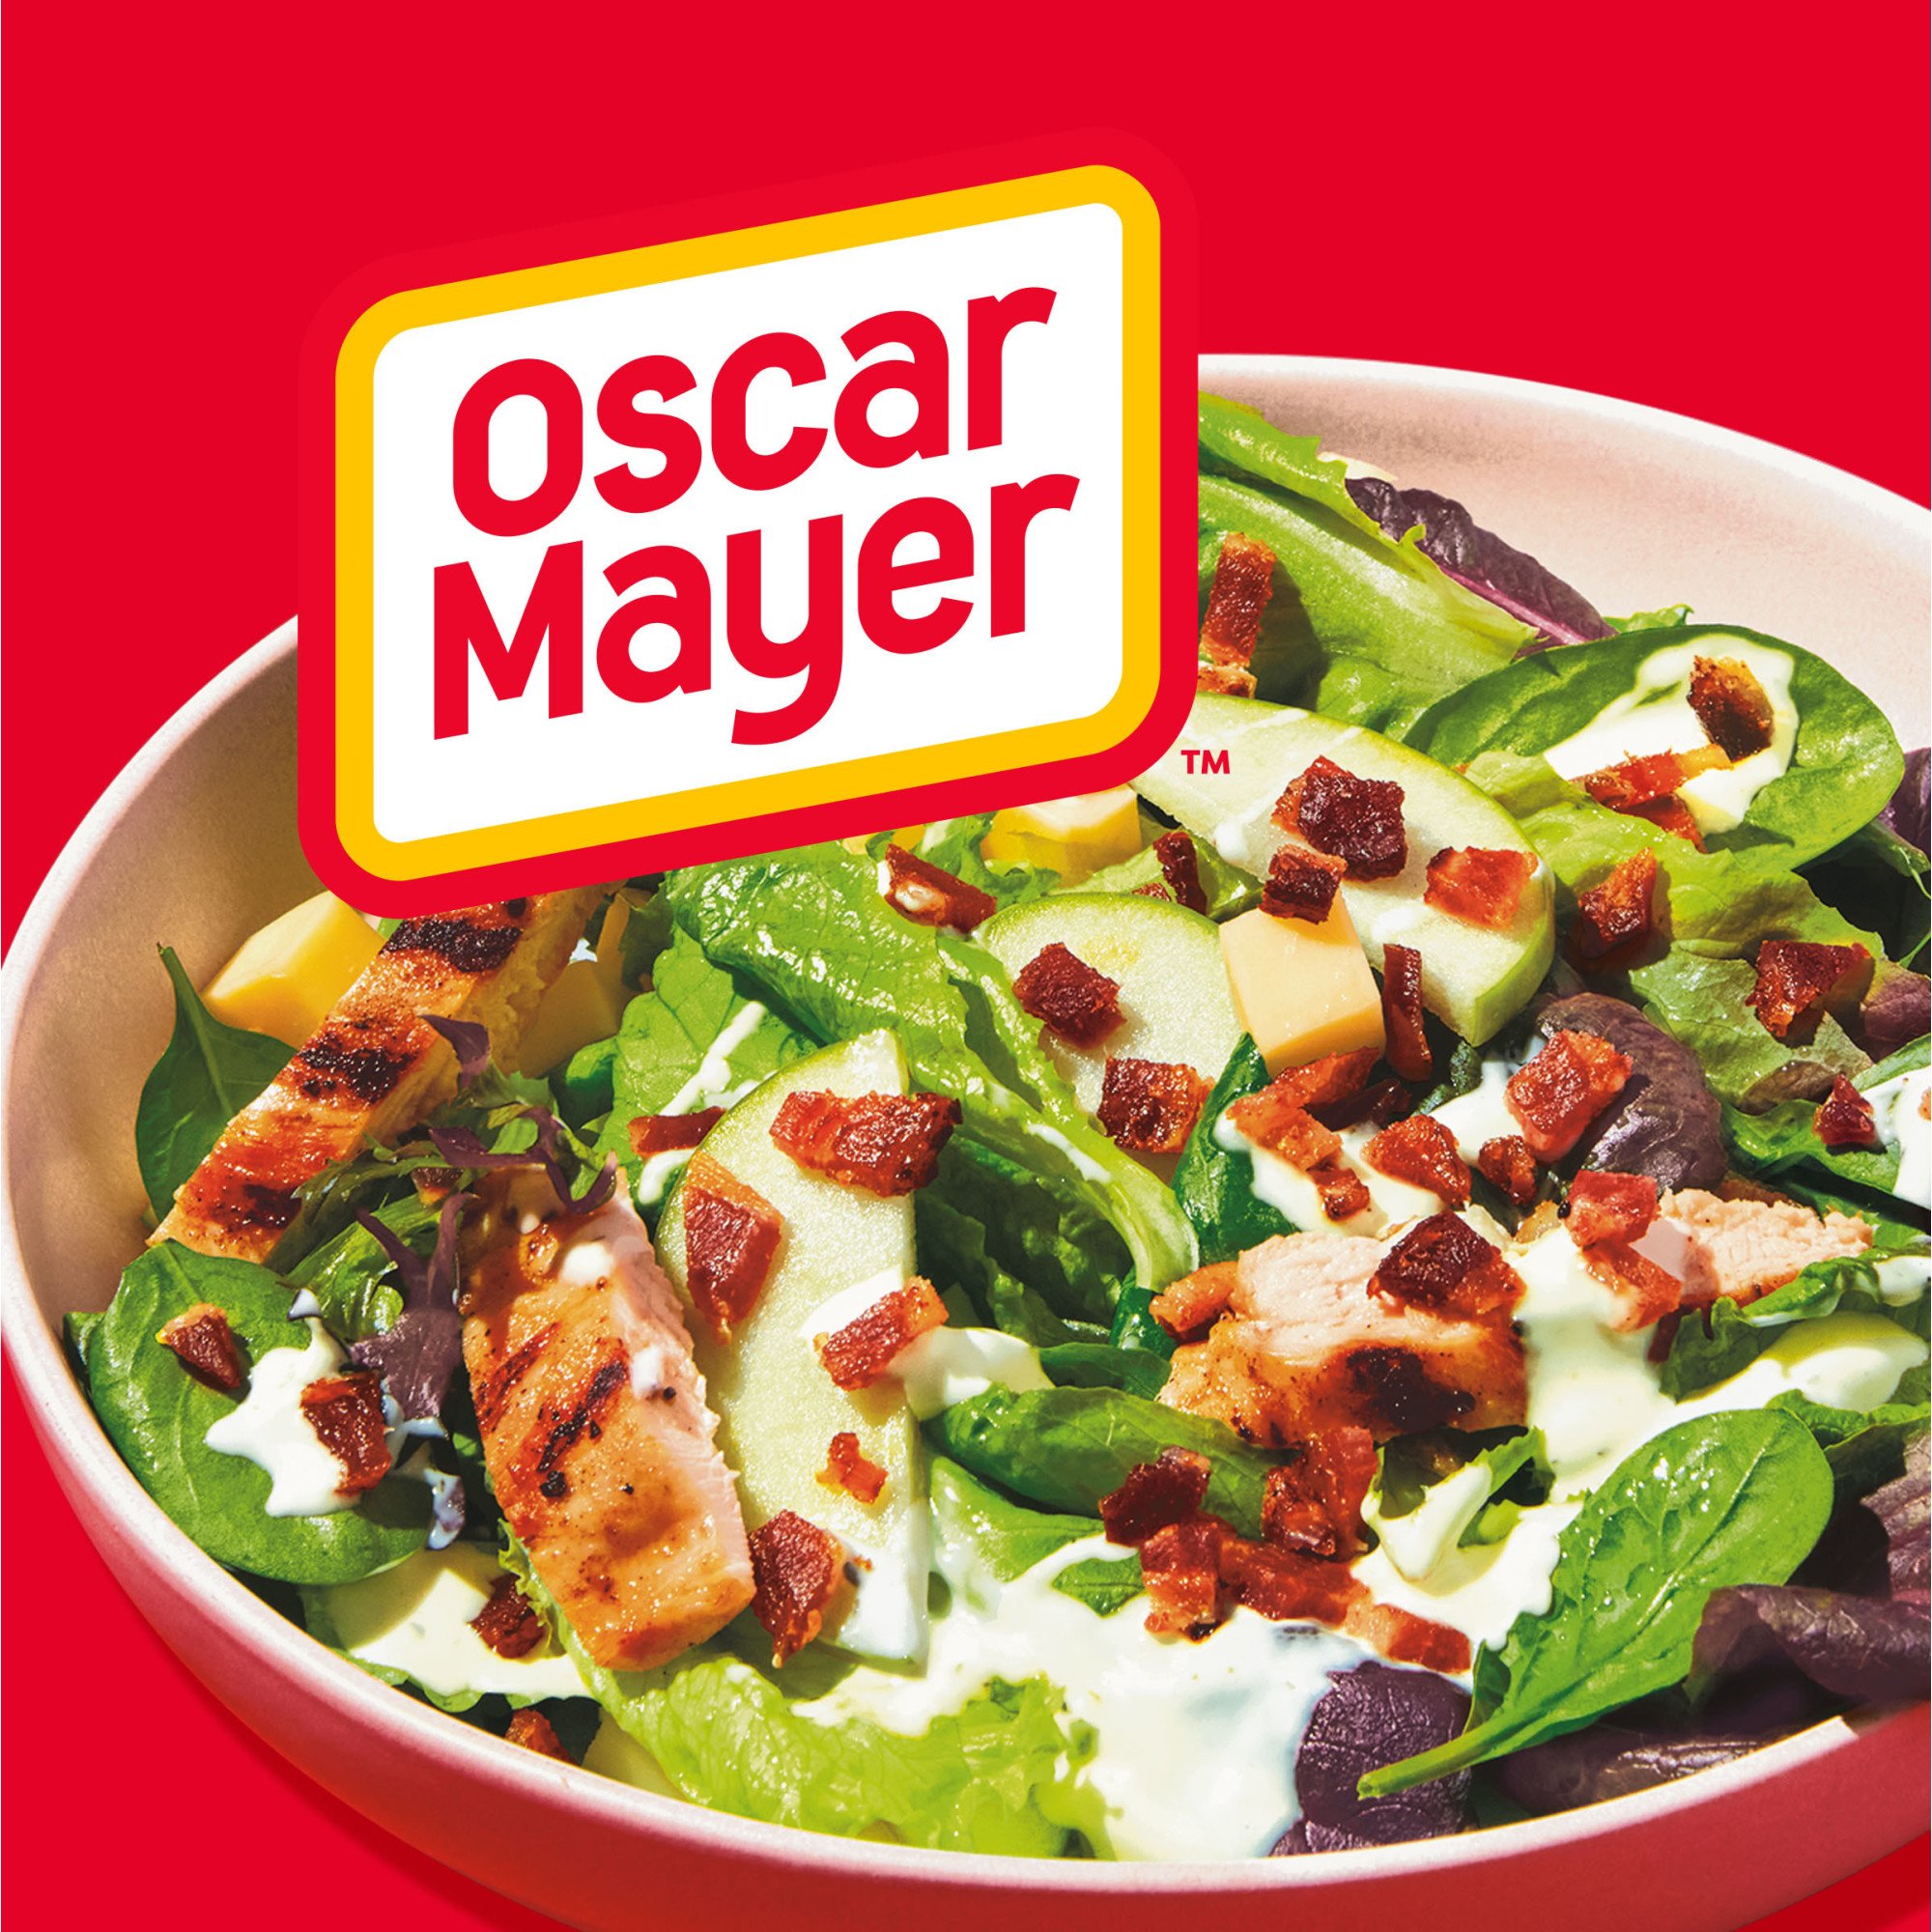 Oscar Mayer Turkey Bacon Bits 4 oz Allergy and Ingredient Information